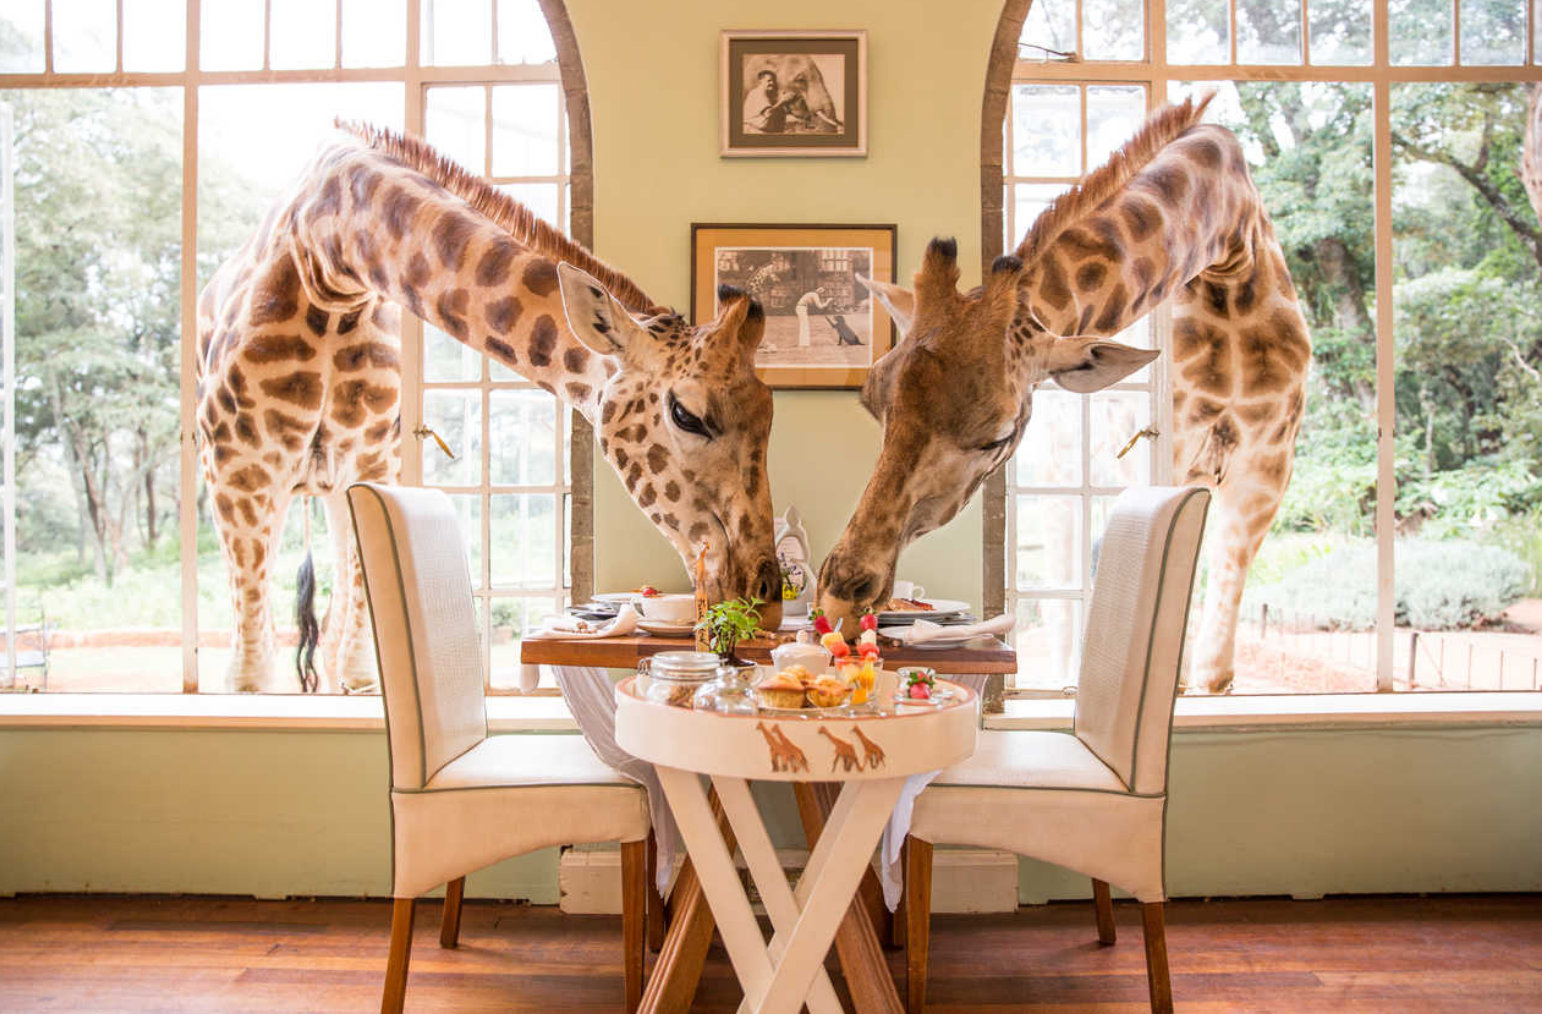 Two giraffes reach in to eat through a window at the giraffe manor luxury property in Nairobi Kenya.